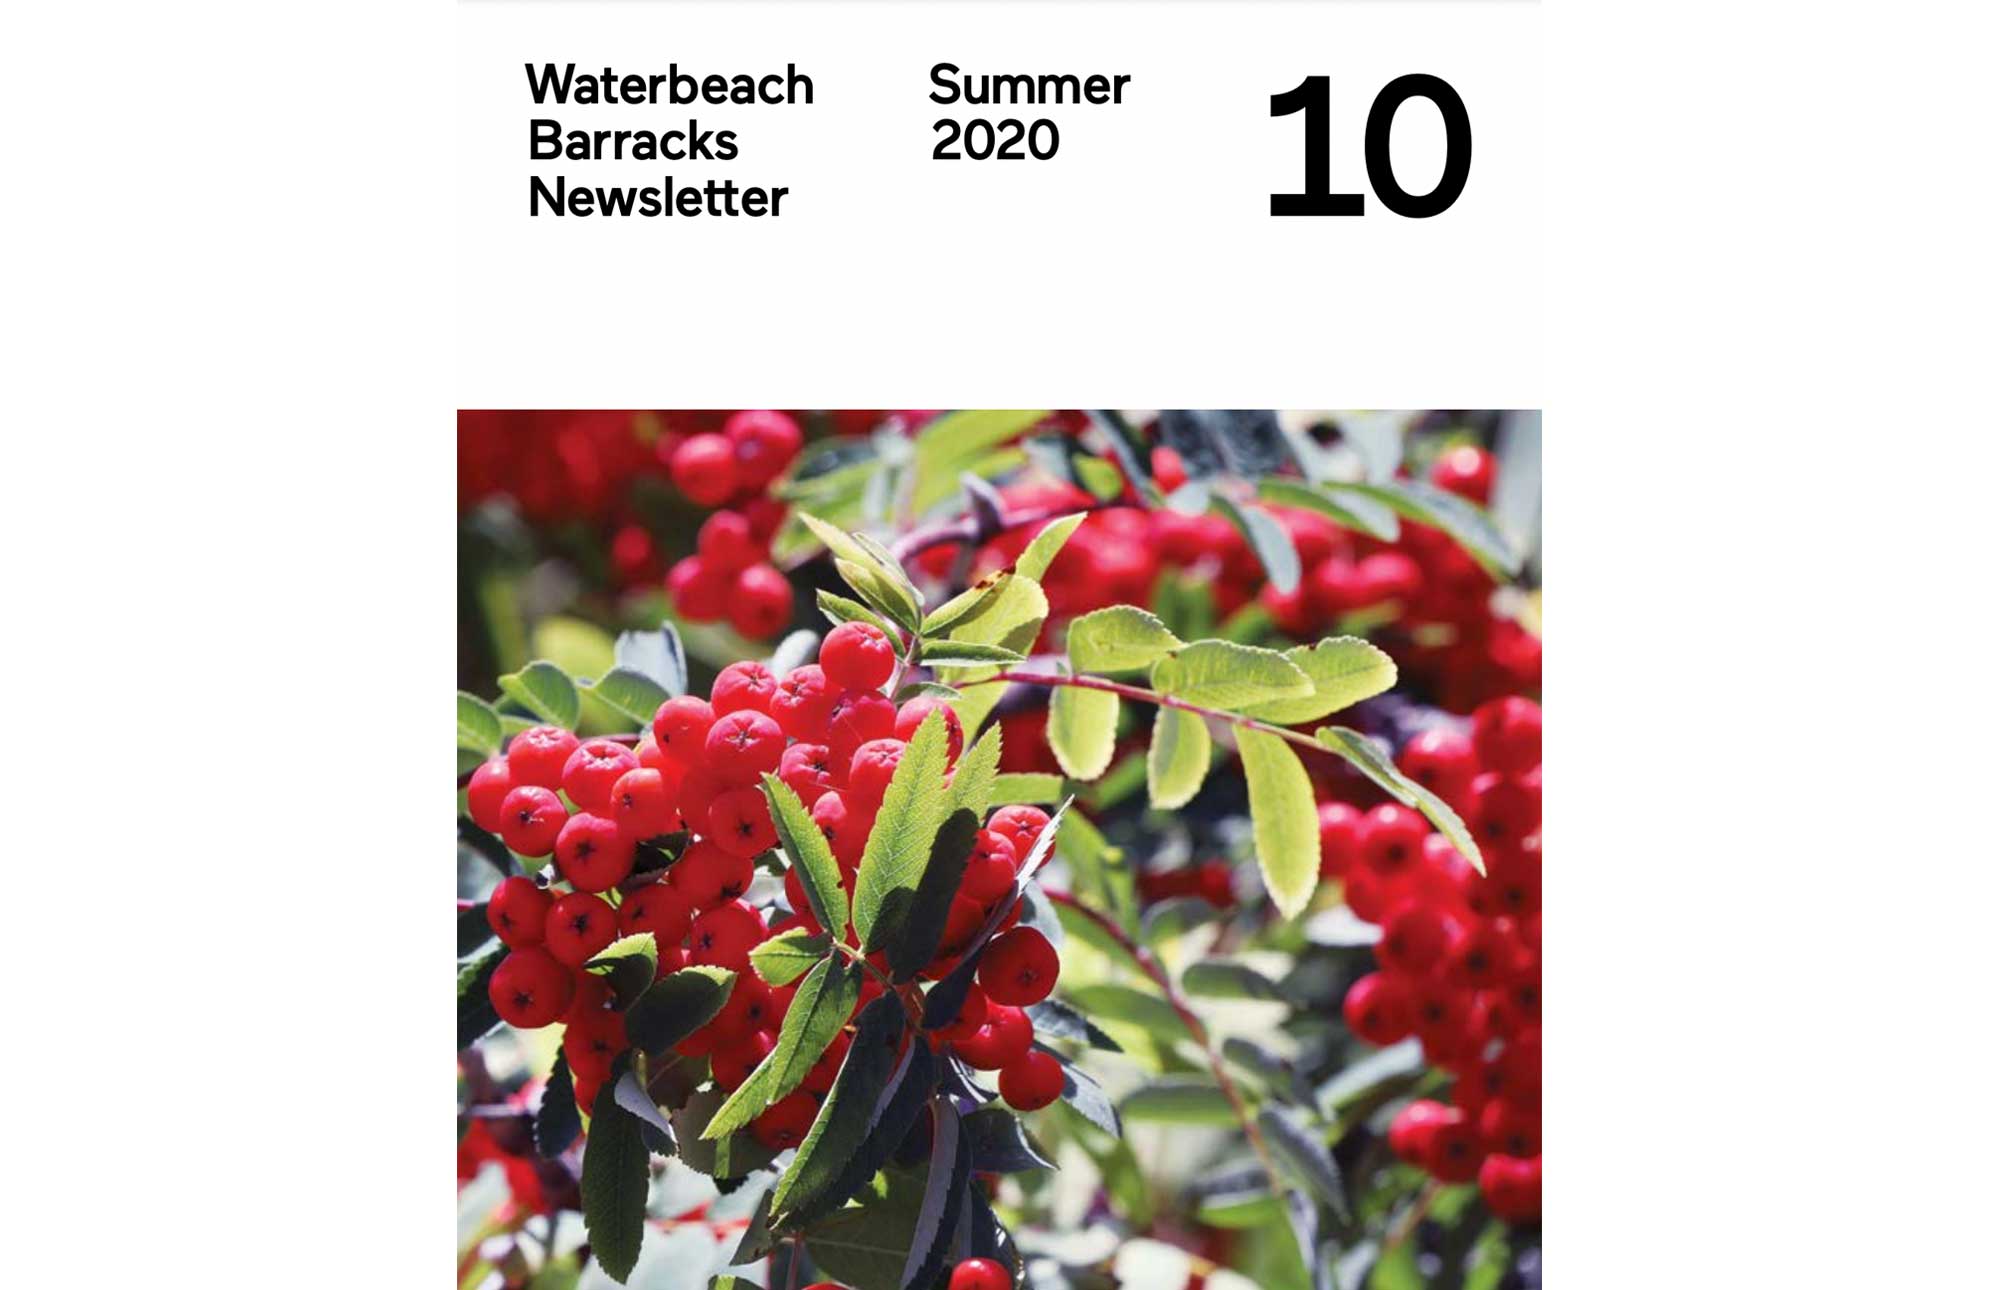 Featured image for “Waterbeach Barracks Newsletter Summer 2020”